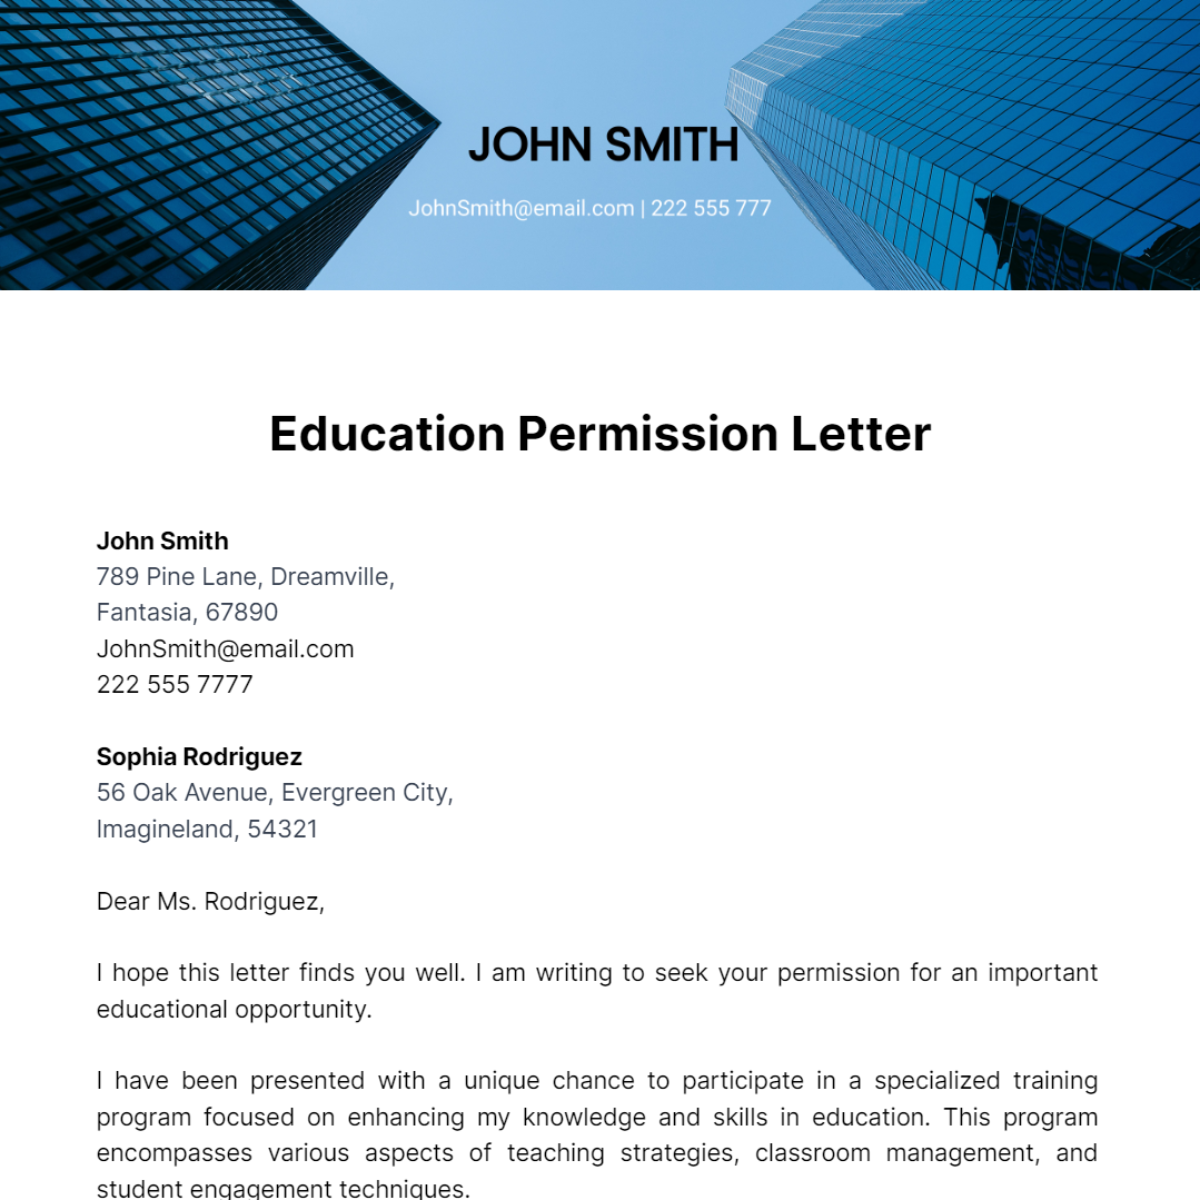 Education Permission Letter Template